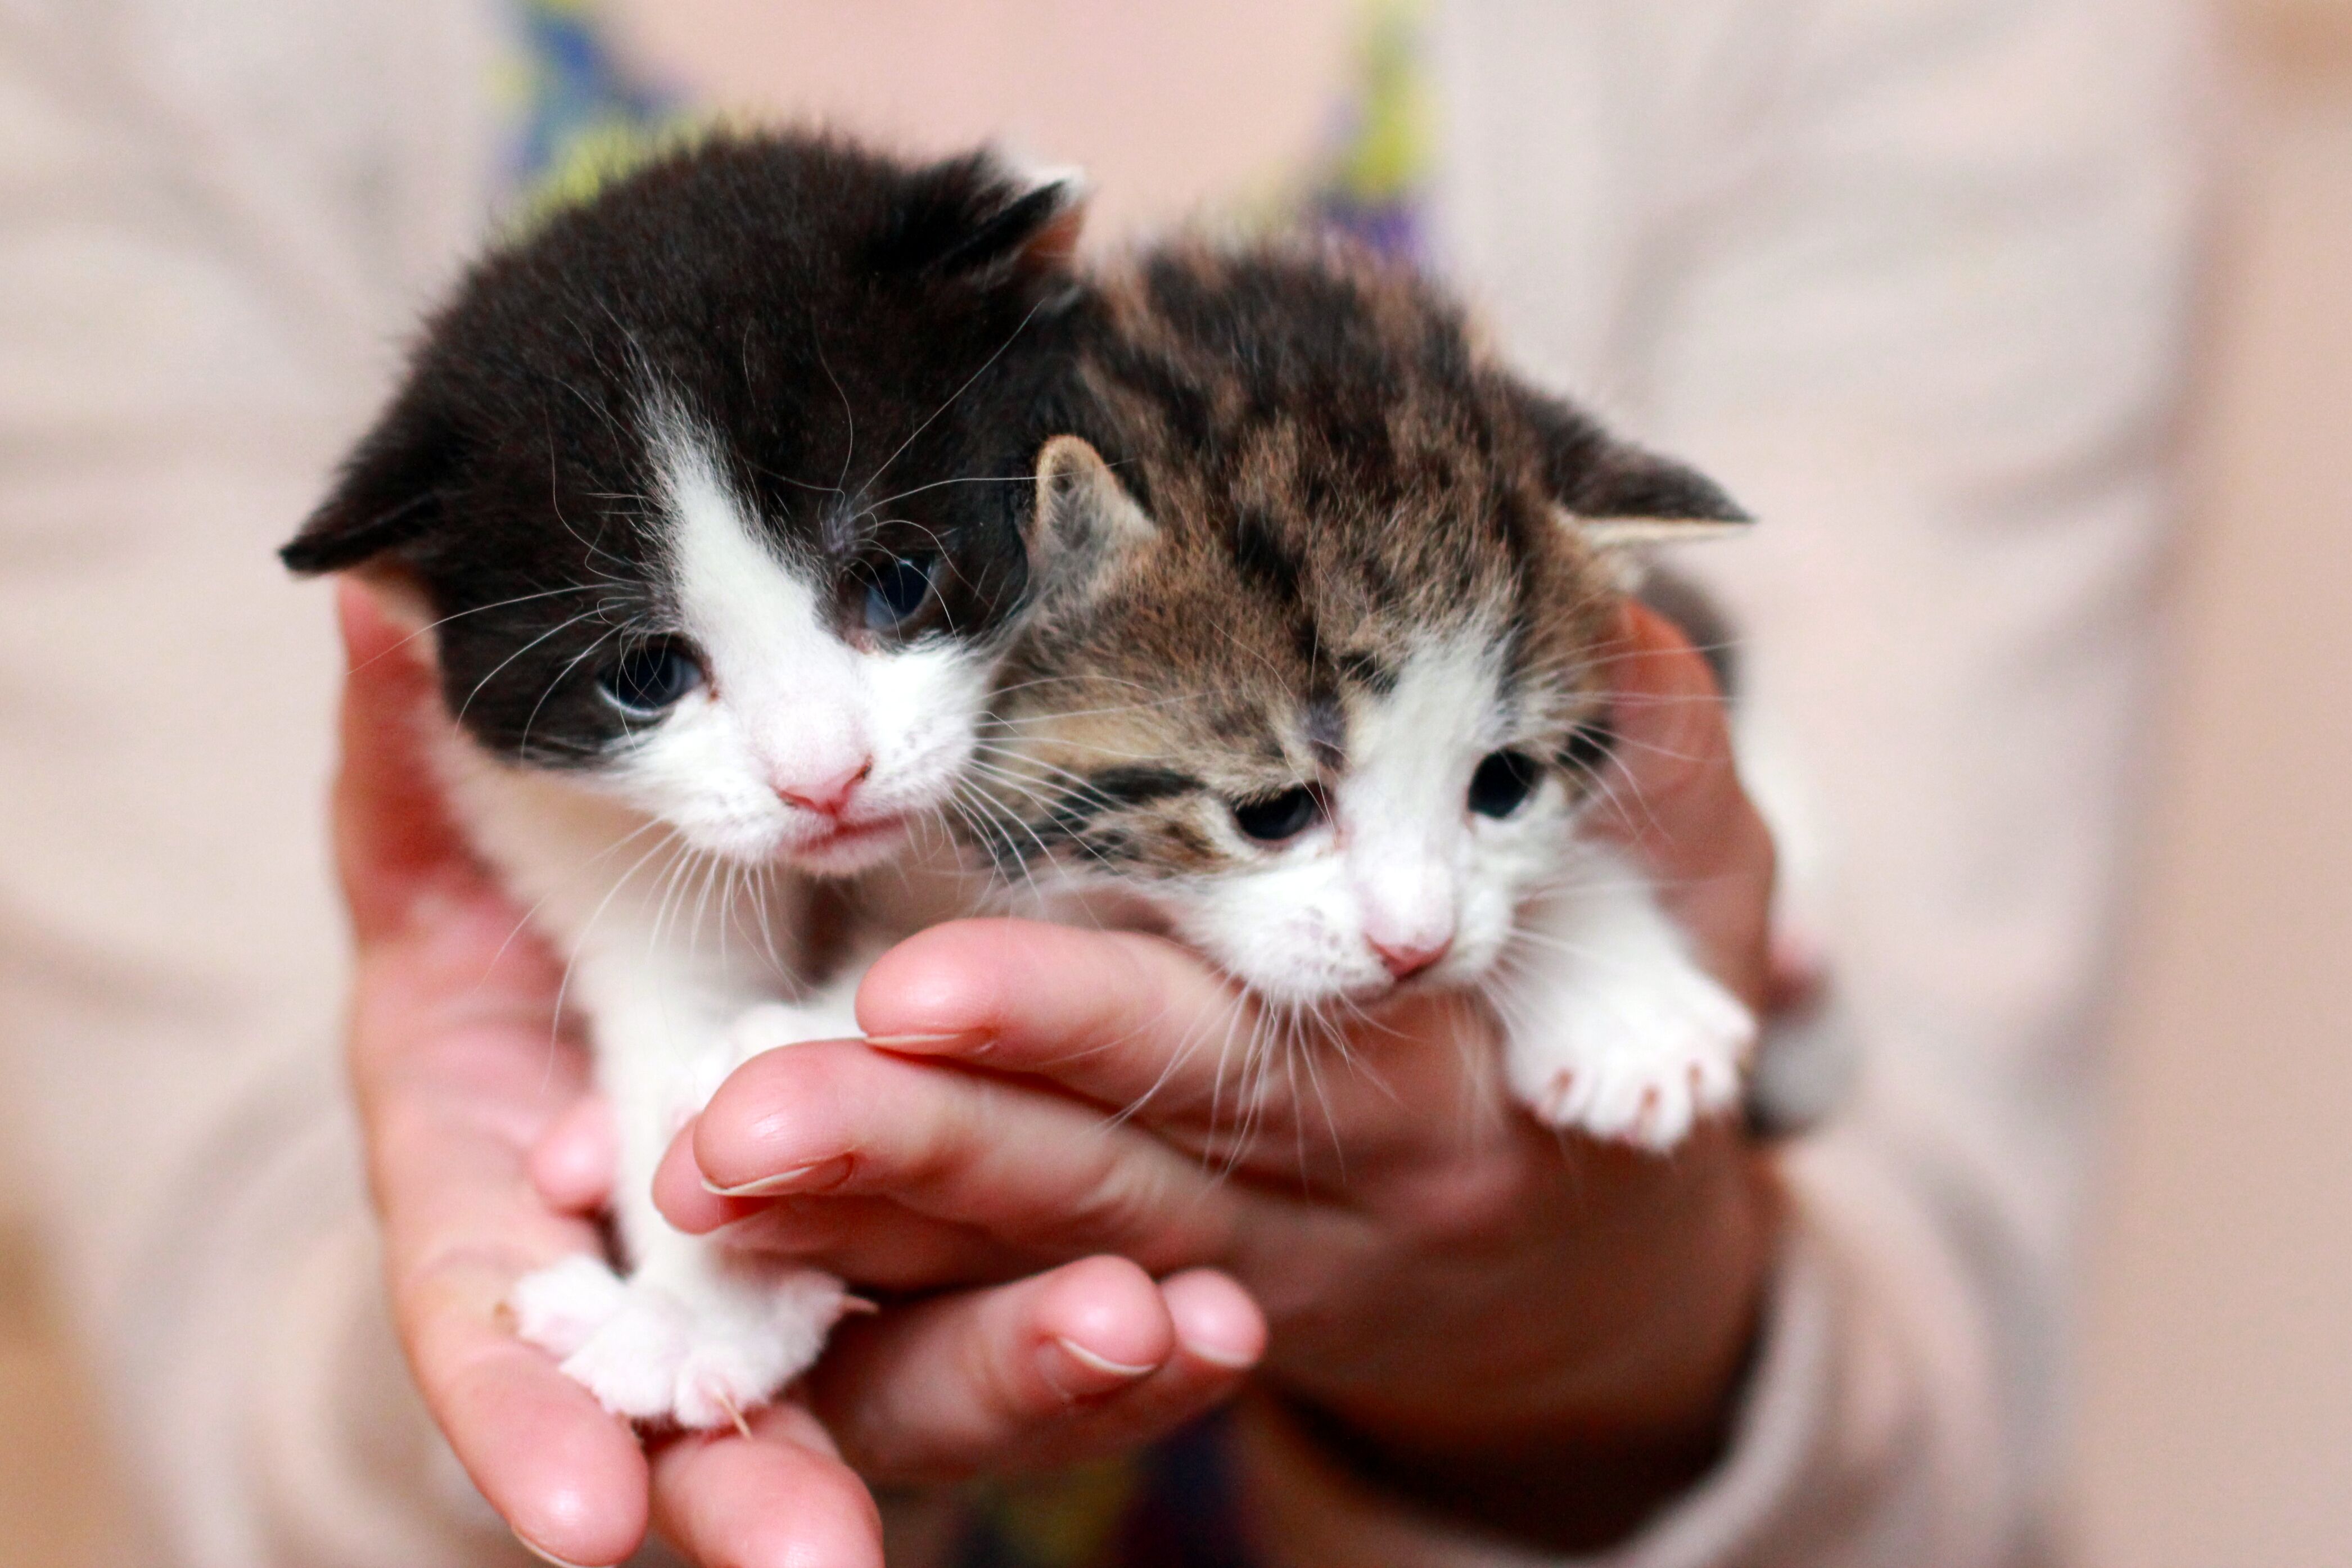 Elouise's kittens